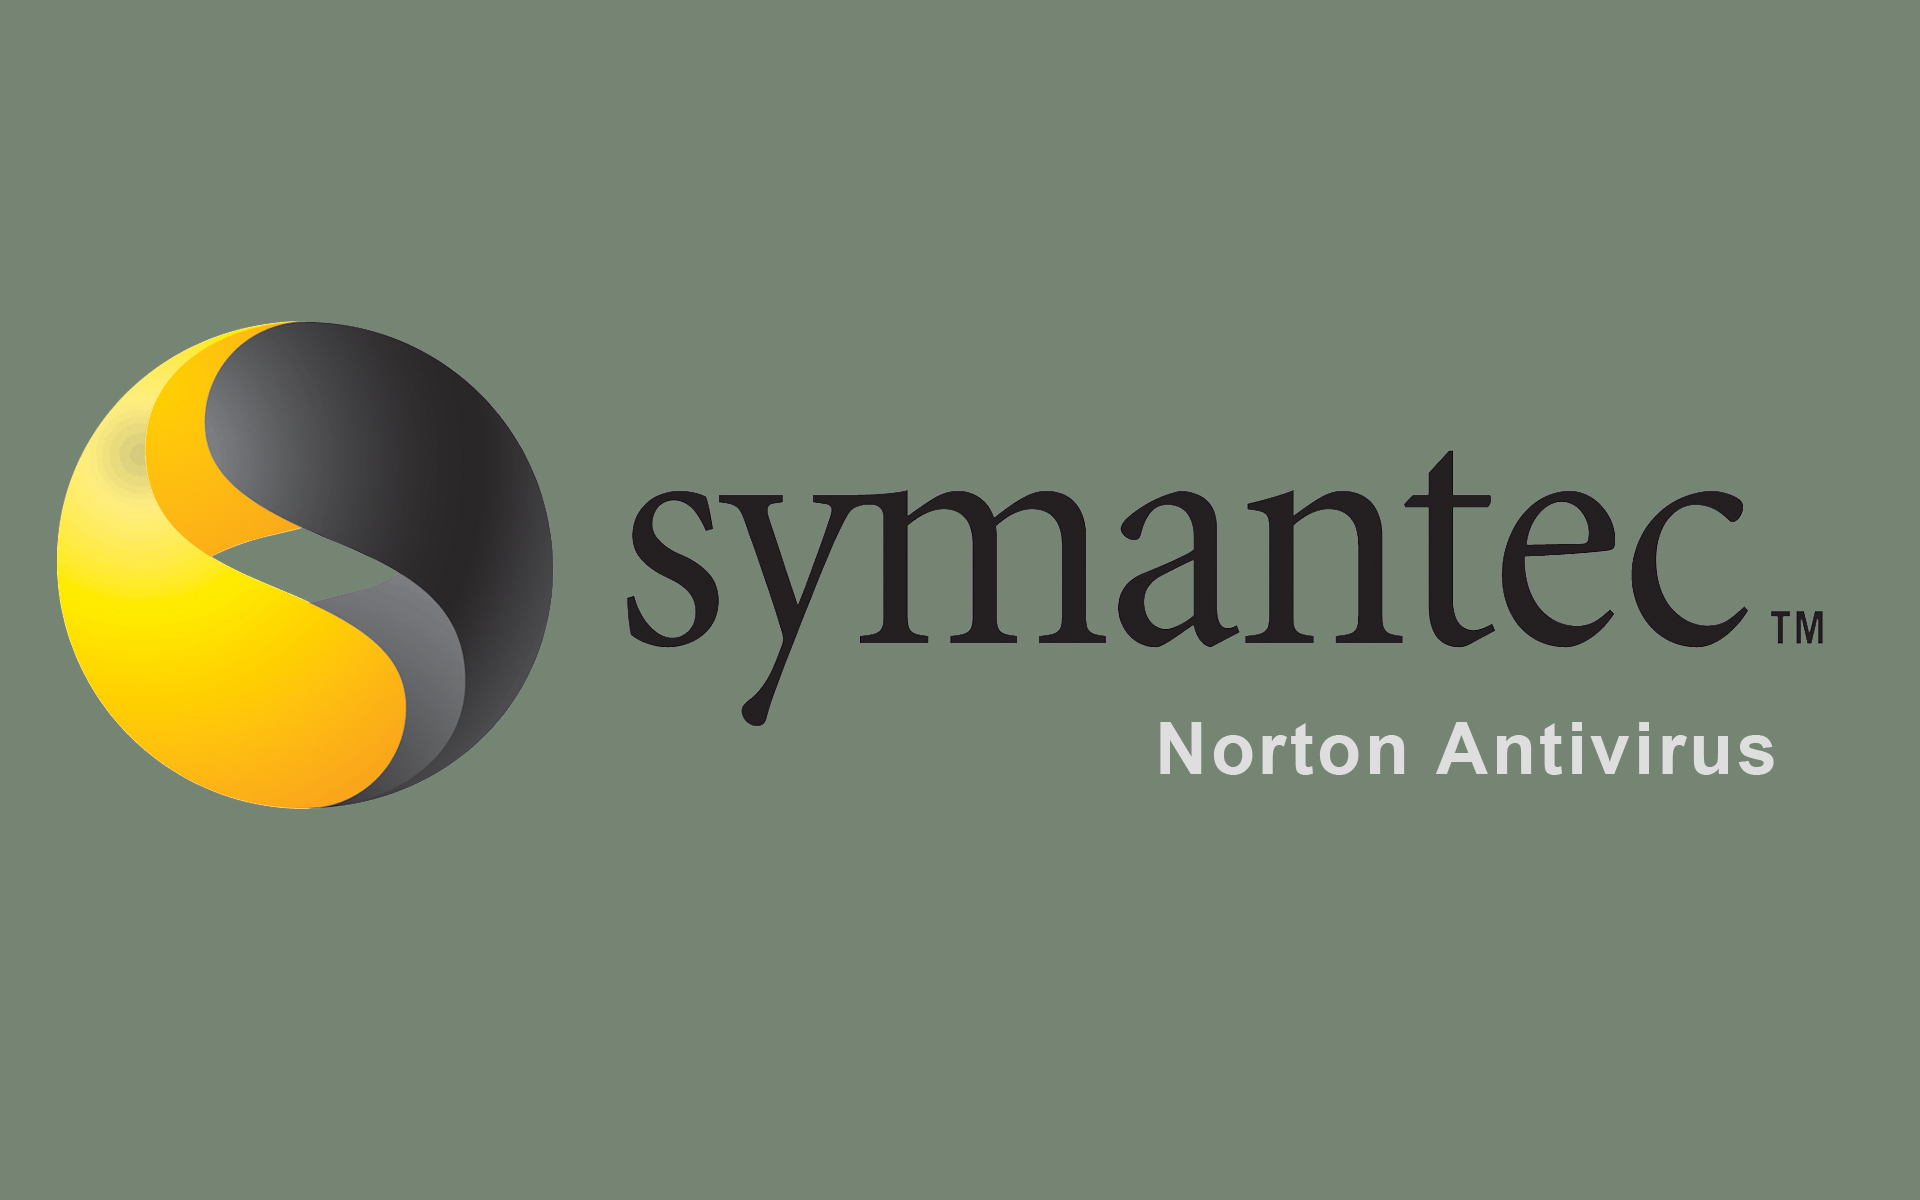 Top Best Antivirus Symantec Corporation Wallpaper